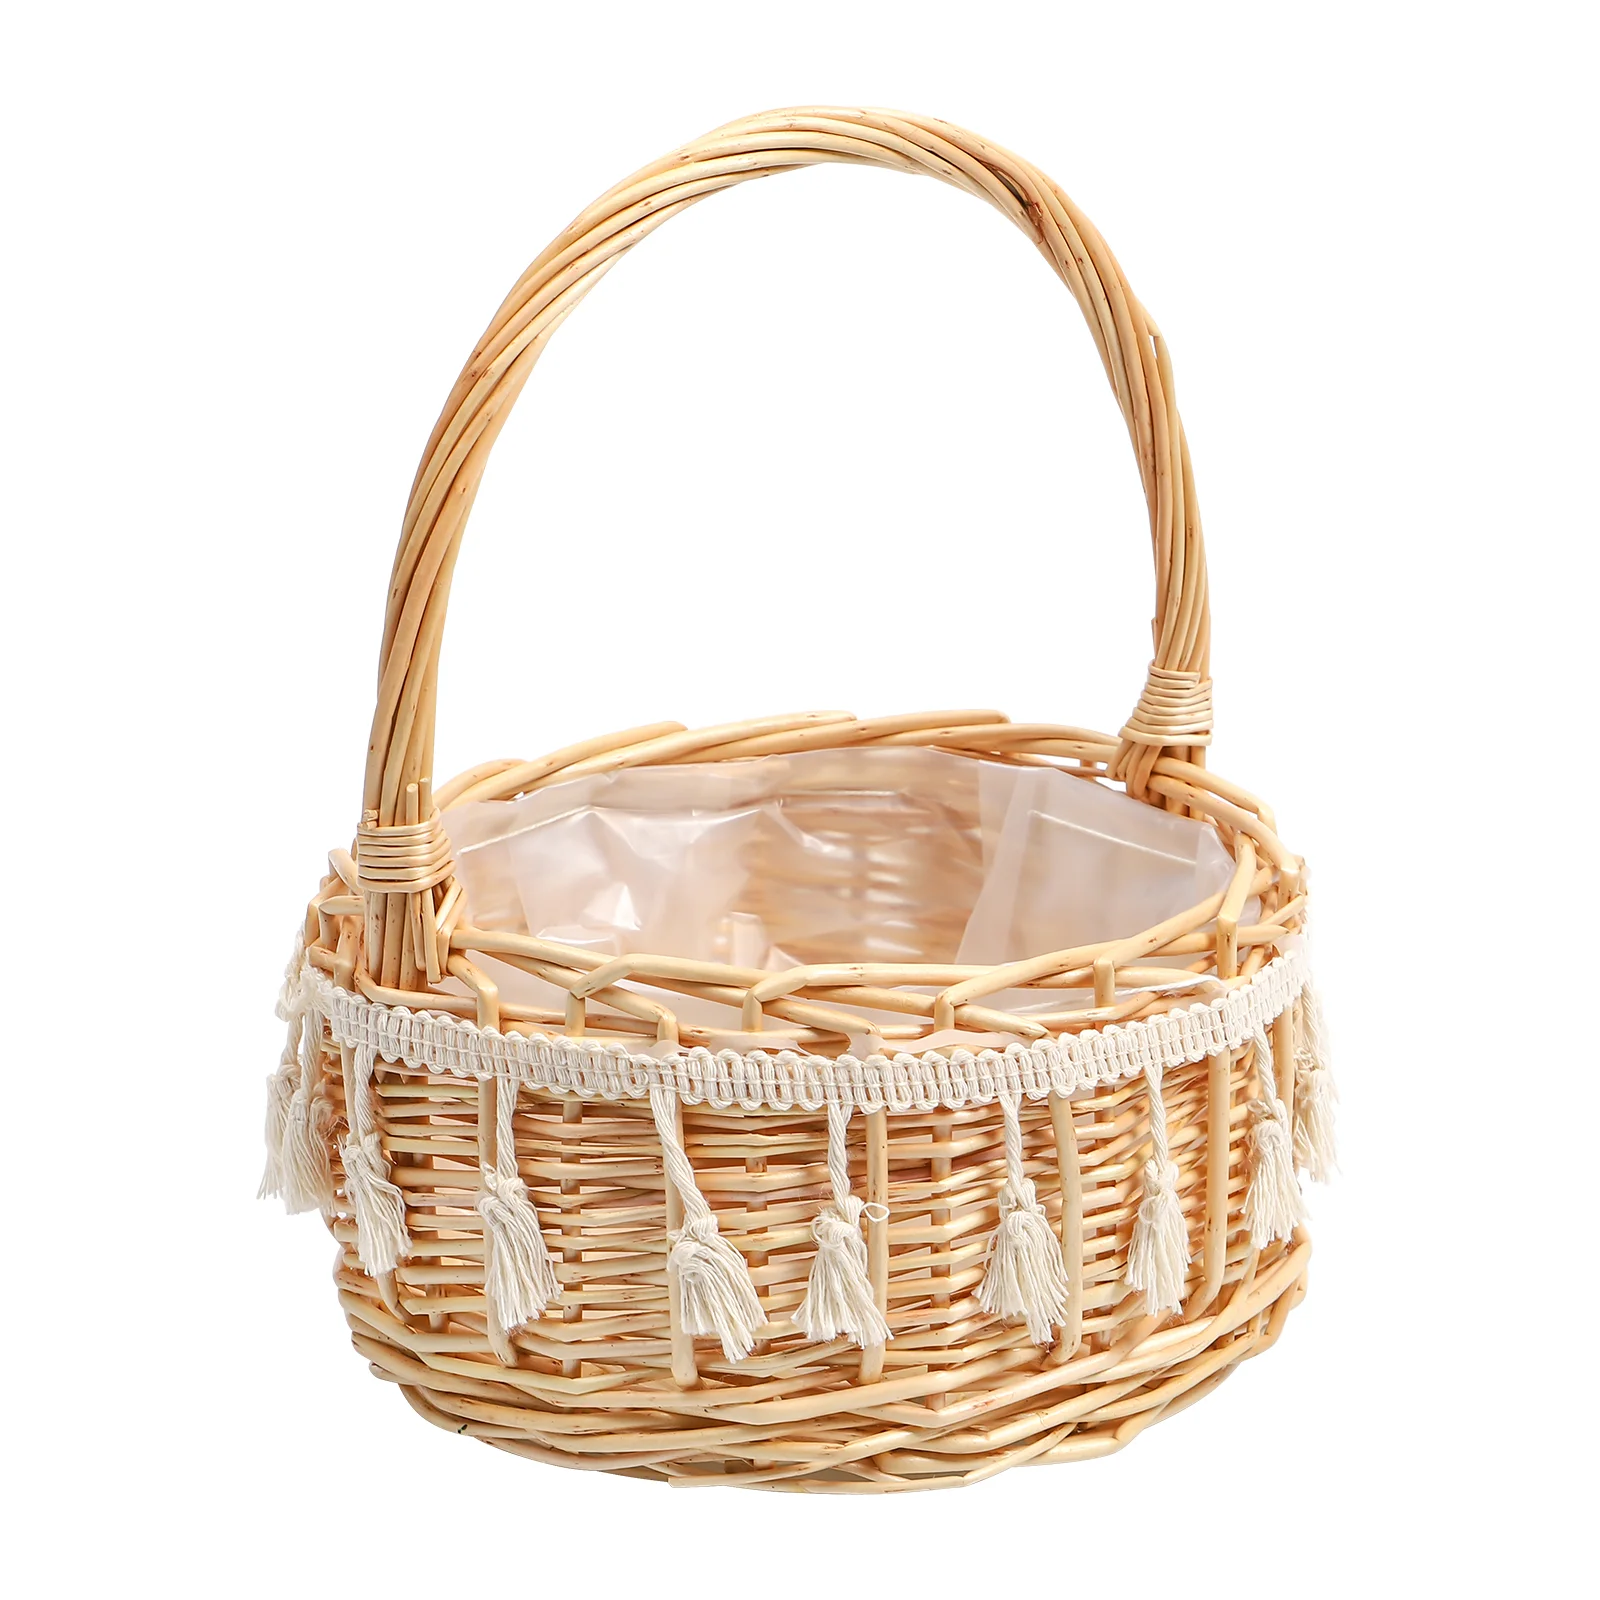 

Basket Flower Girl Baskets Handle Rattan Wicker Woven Easter Decorative Handheld Bride Weddings Gift Empty Handles Women